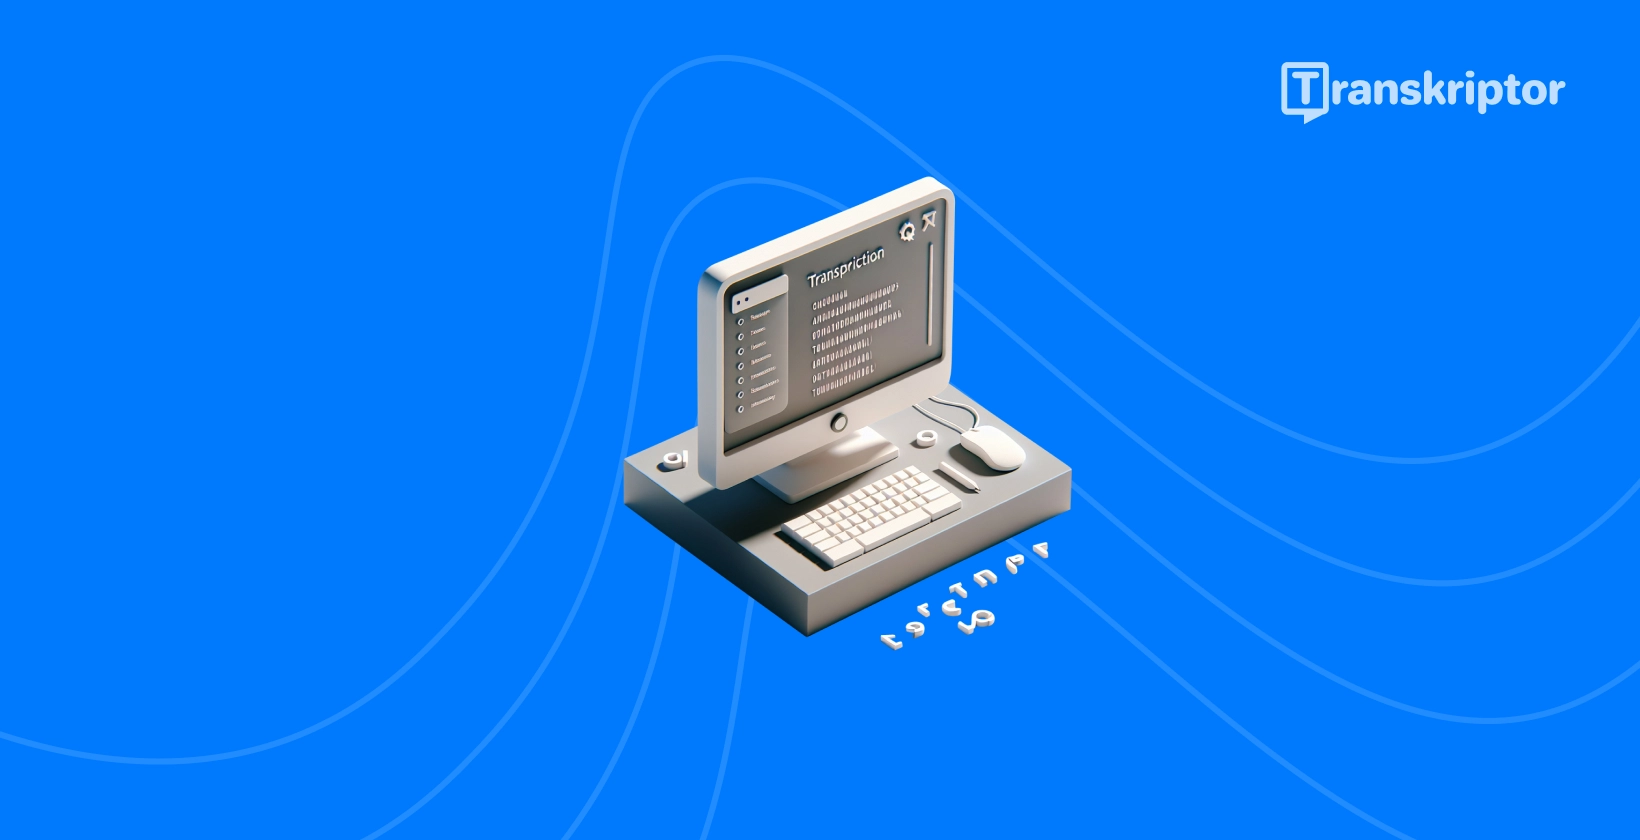 ऑडियो ट्रांसक्रिप्शन सॉफ्टवेयर का एक सरलीकृत चित्रण डेस्कटॉप पर MuseScore।